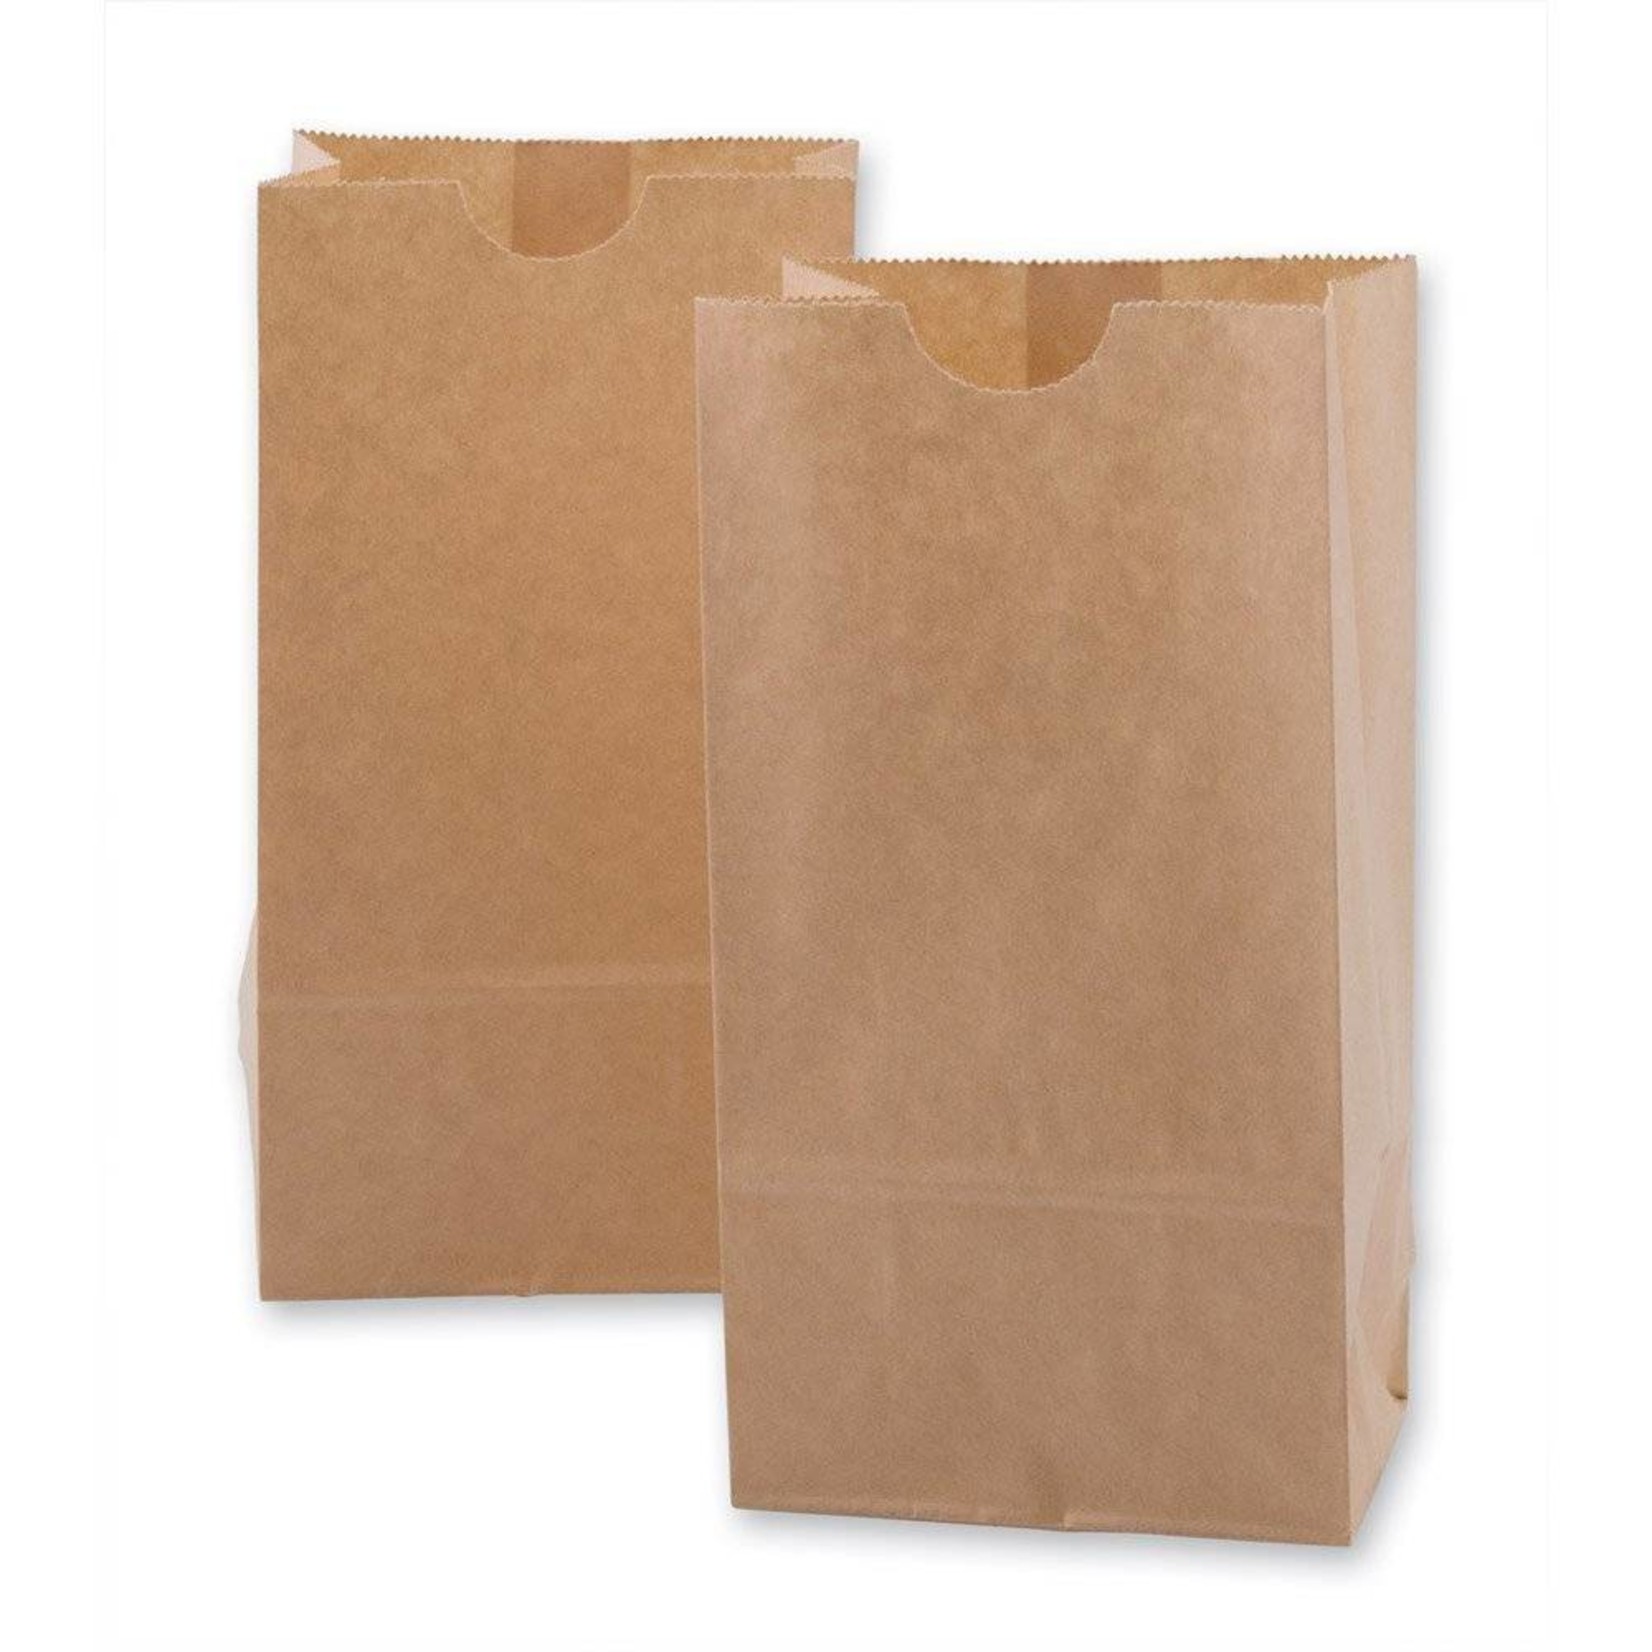 Bags-Brown-Paper-0.5lb-50pk - Victoria Party Store